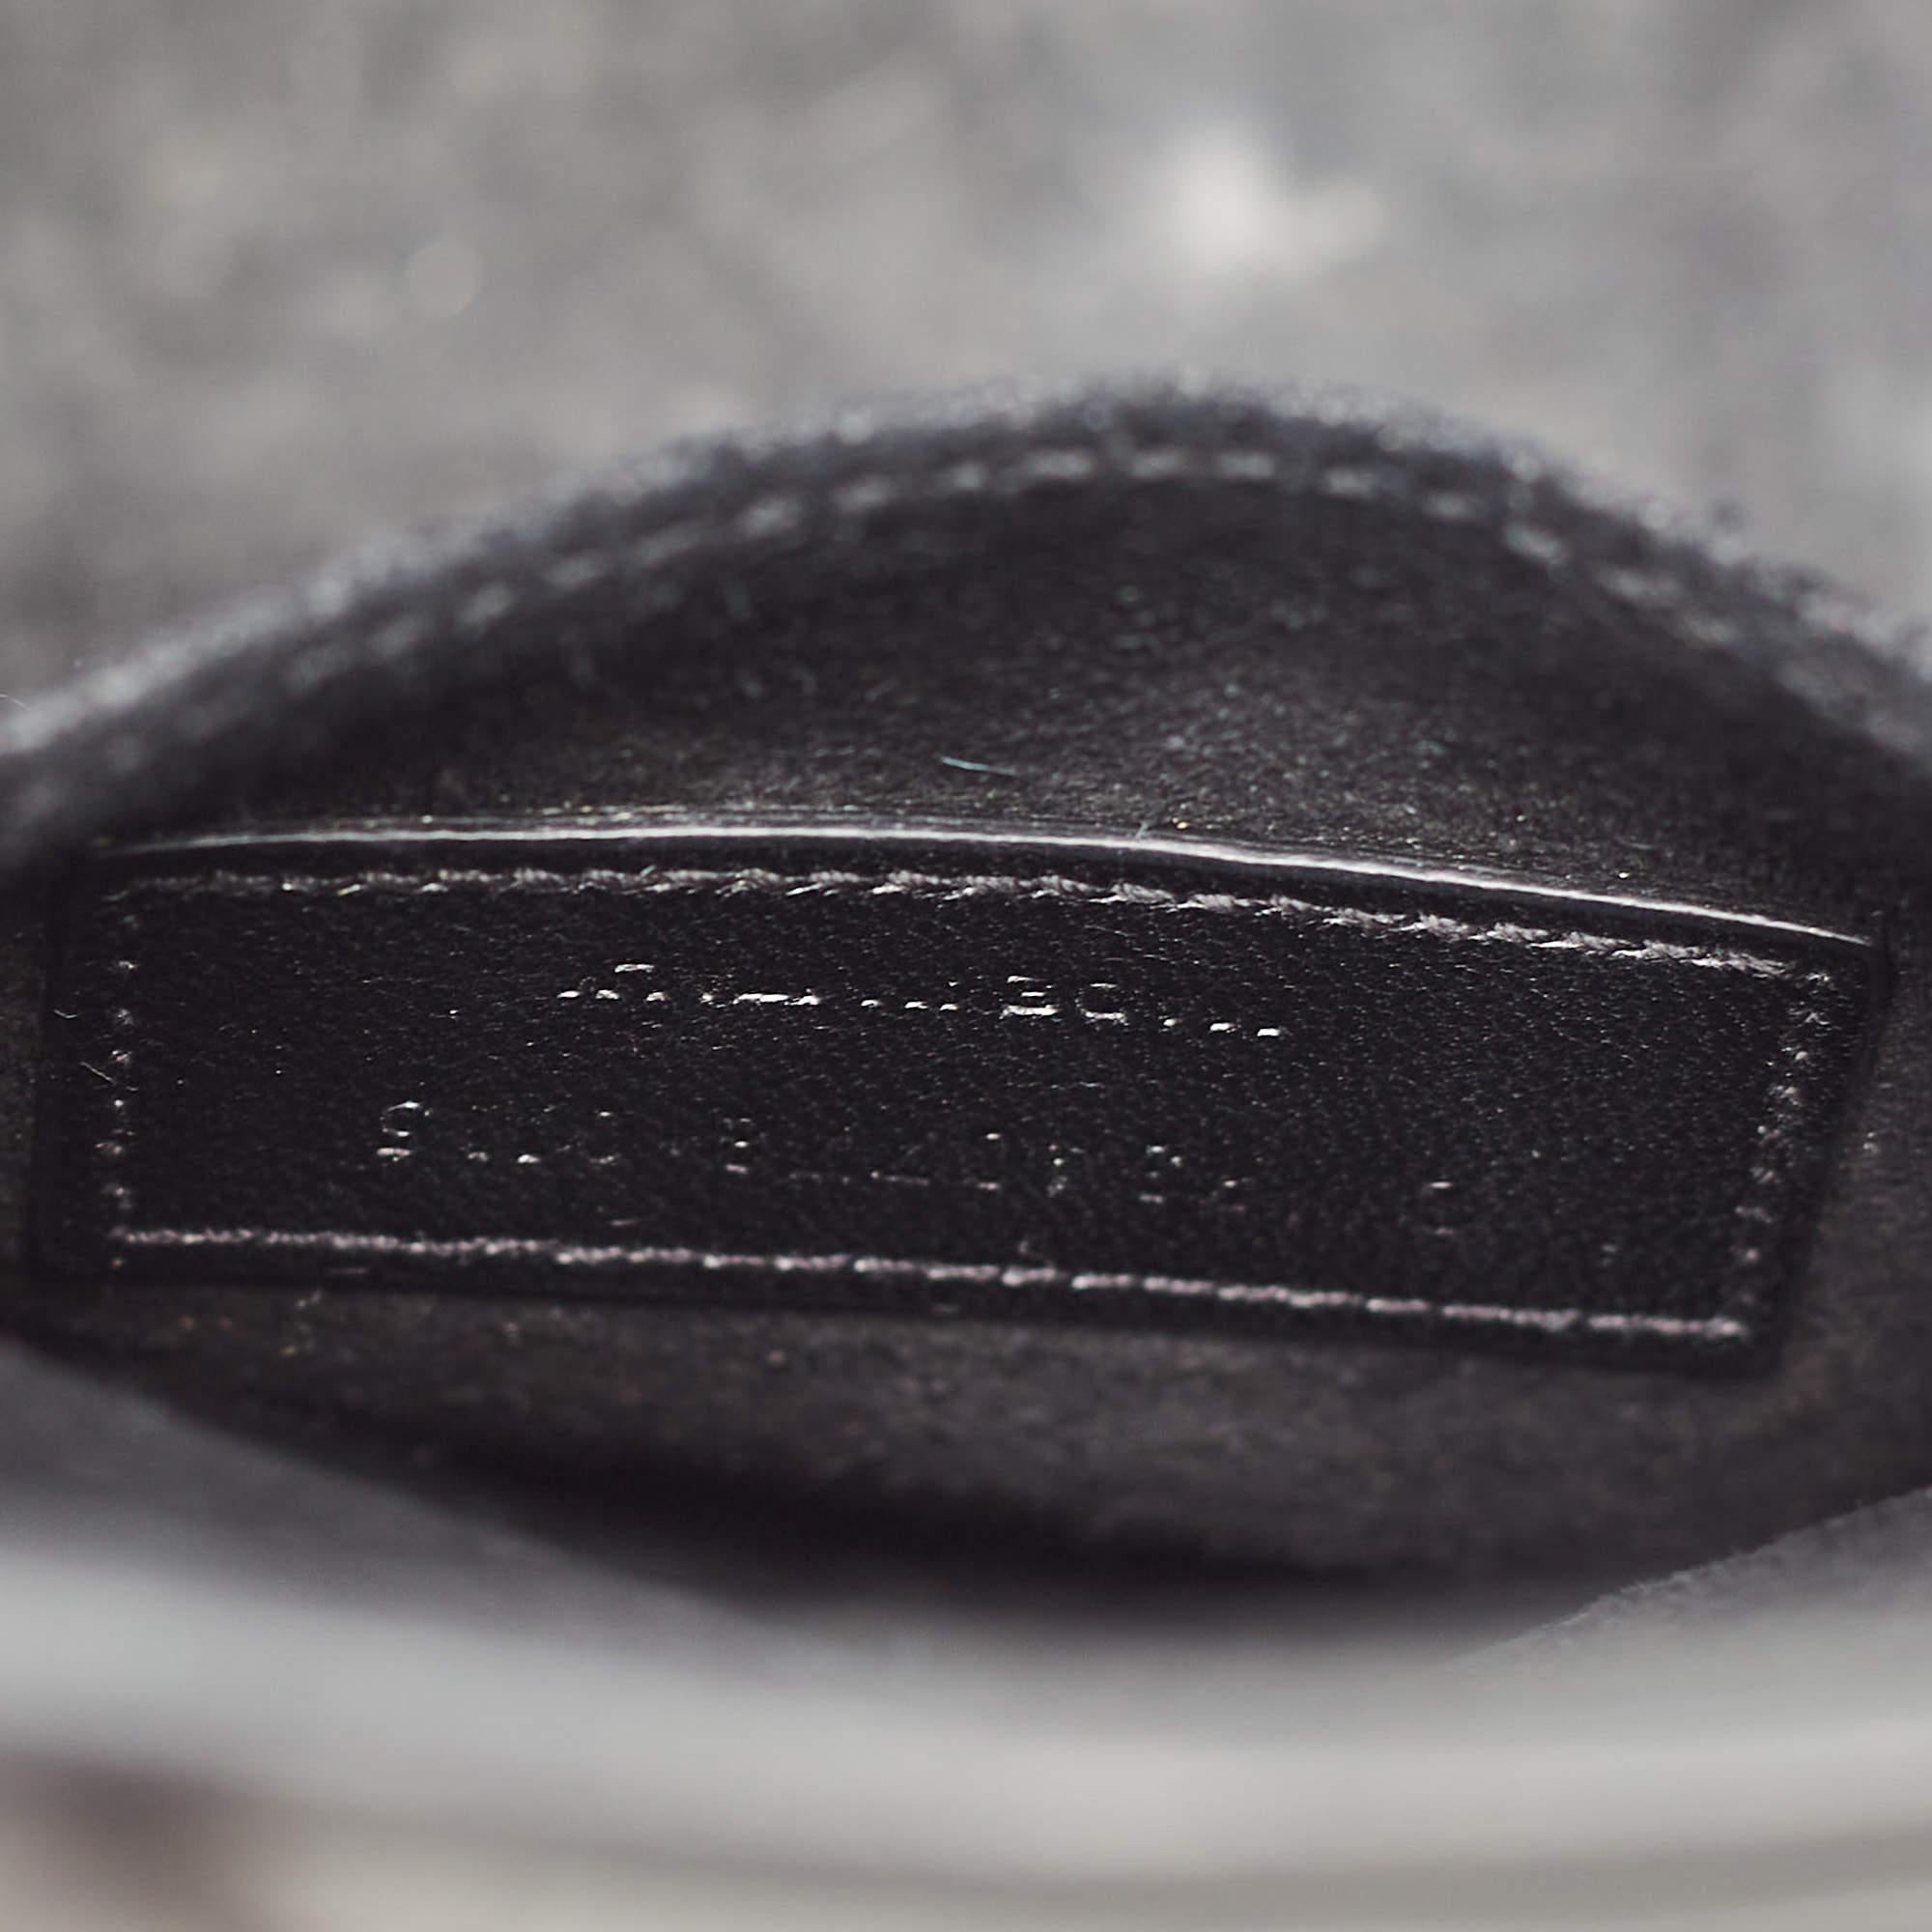 Saint Laurent Black Croc Embossed Leather Nano Classic Sac De Jour Tote 5